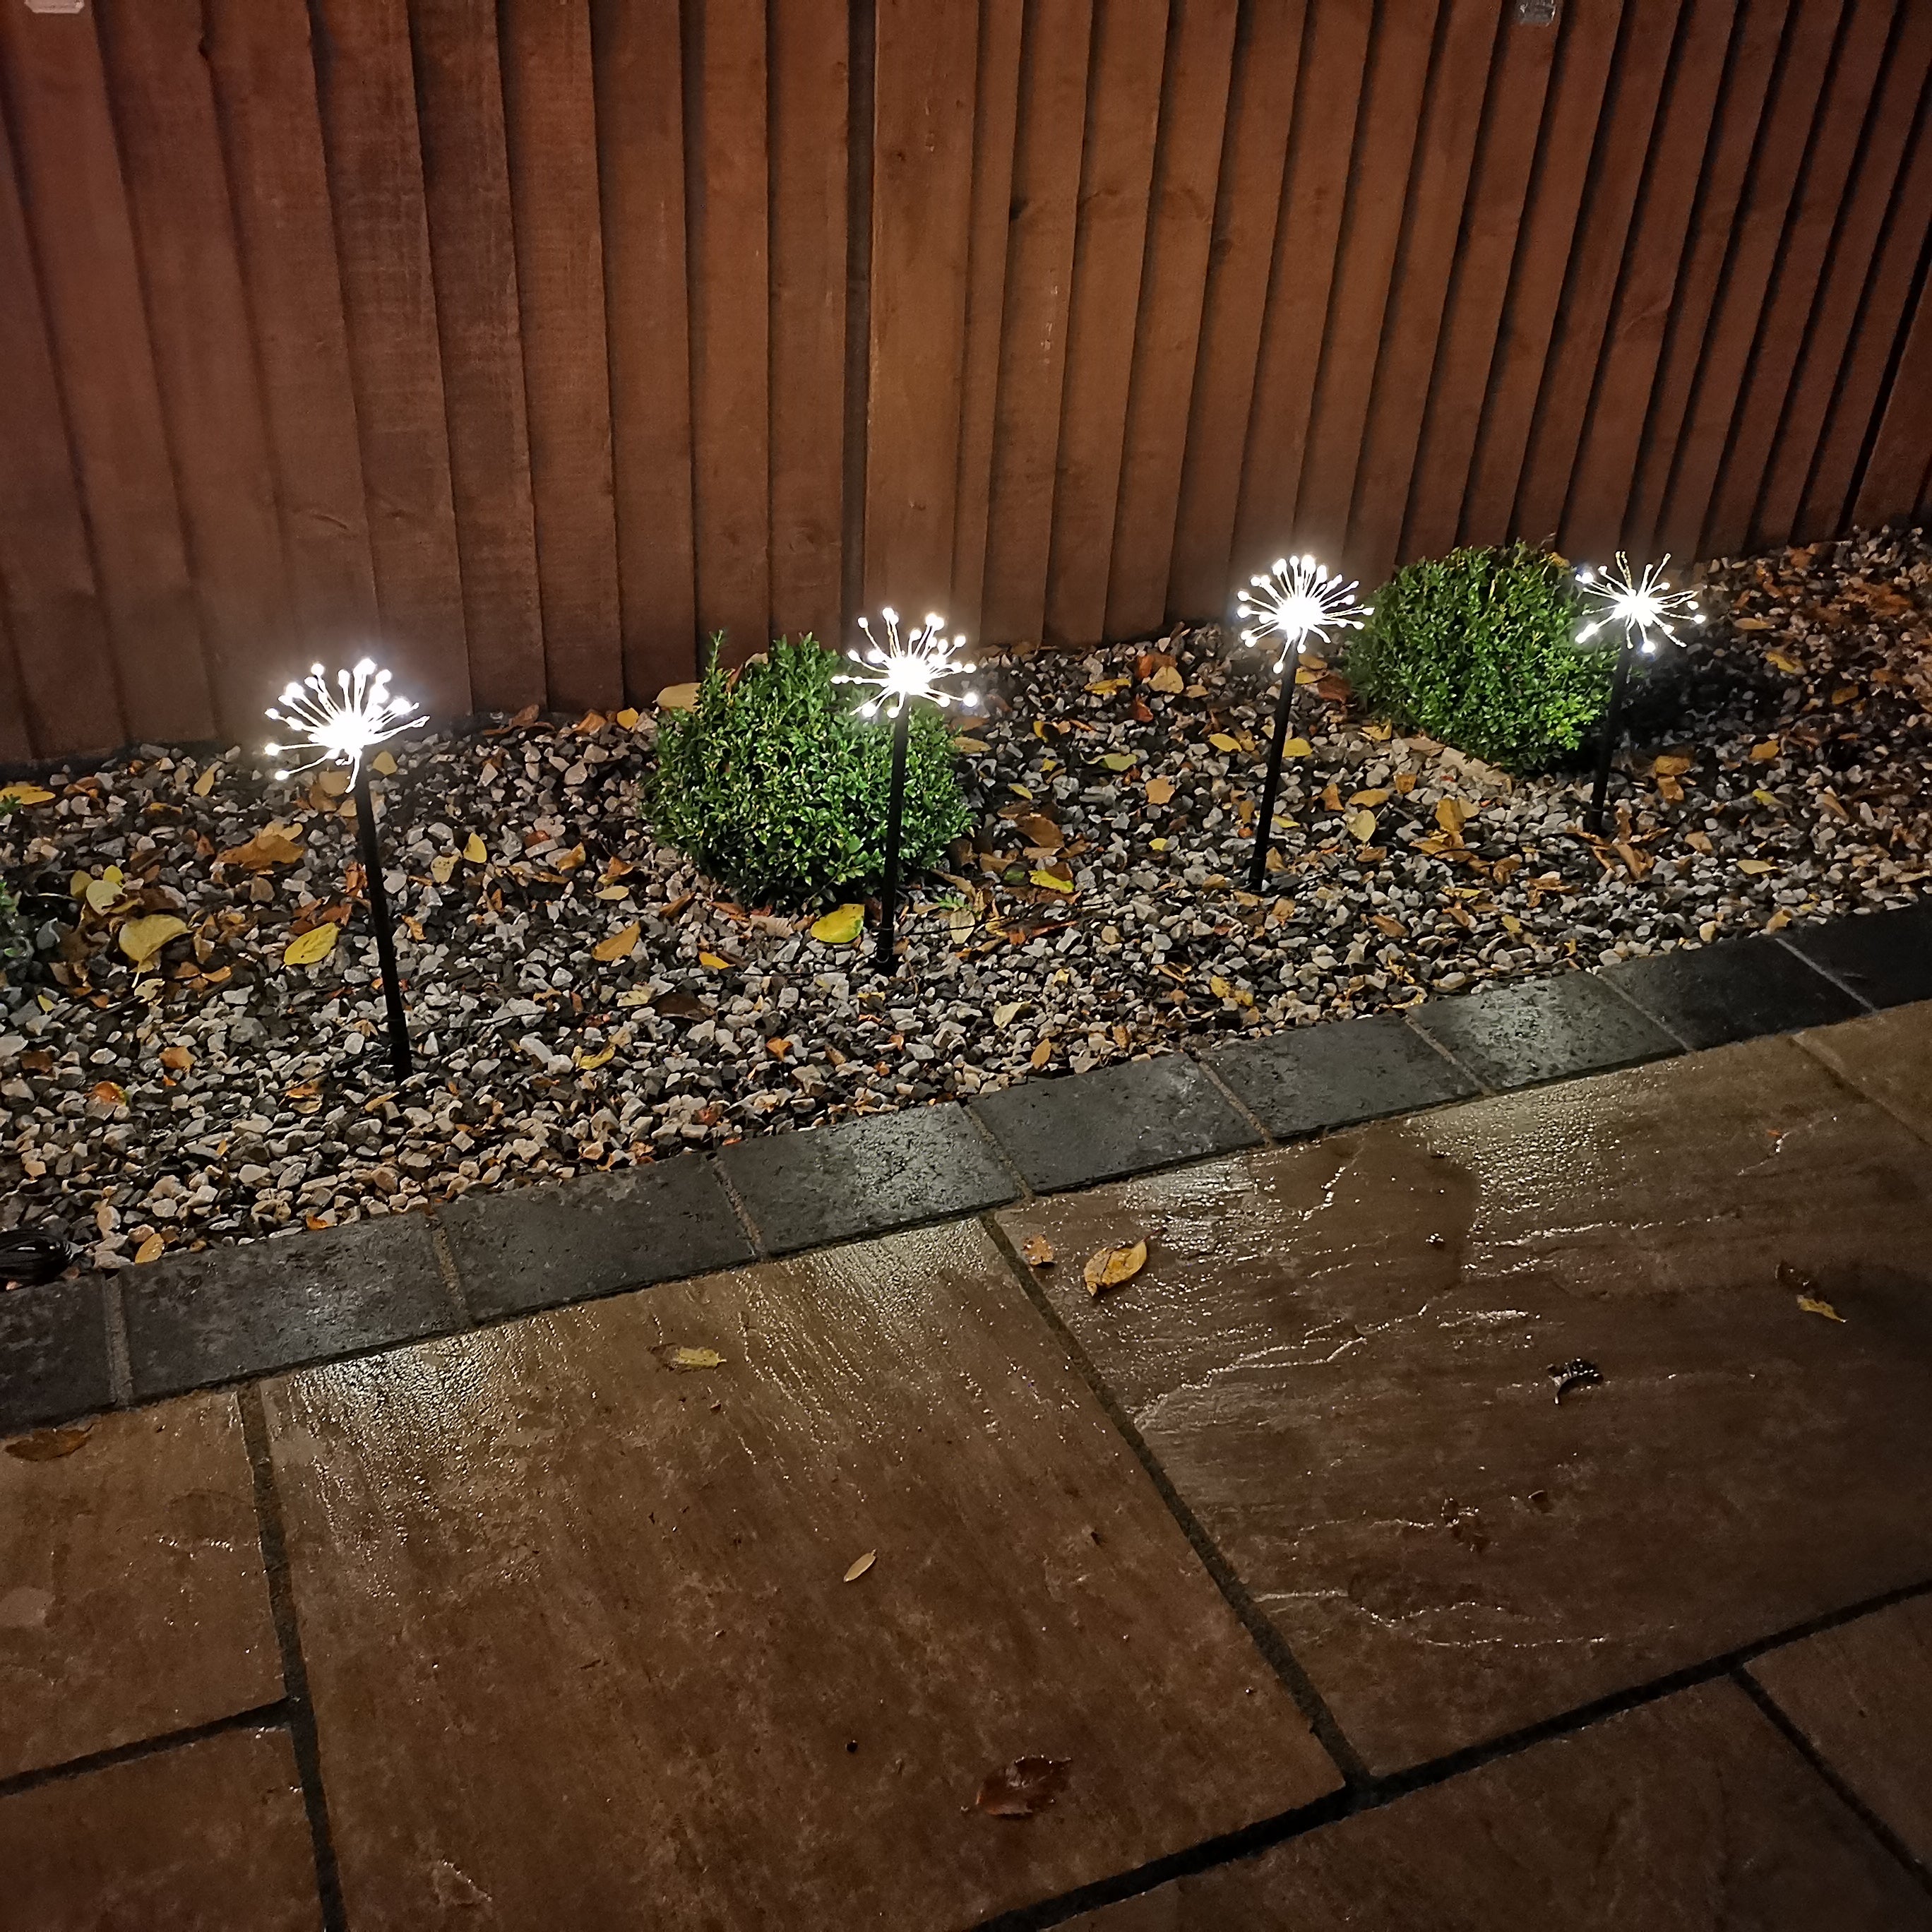 4pcs Festive Twinkling LED Starburst Stake Light Christmas Pathmarkers in Warm White